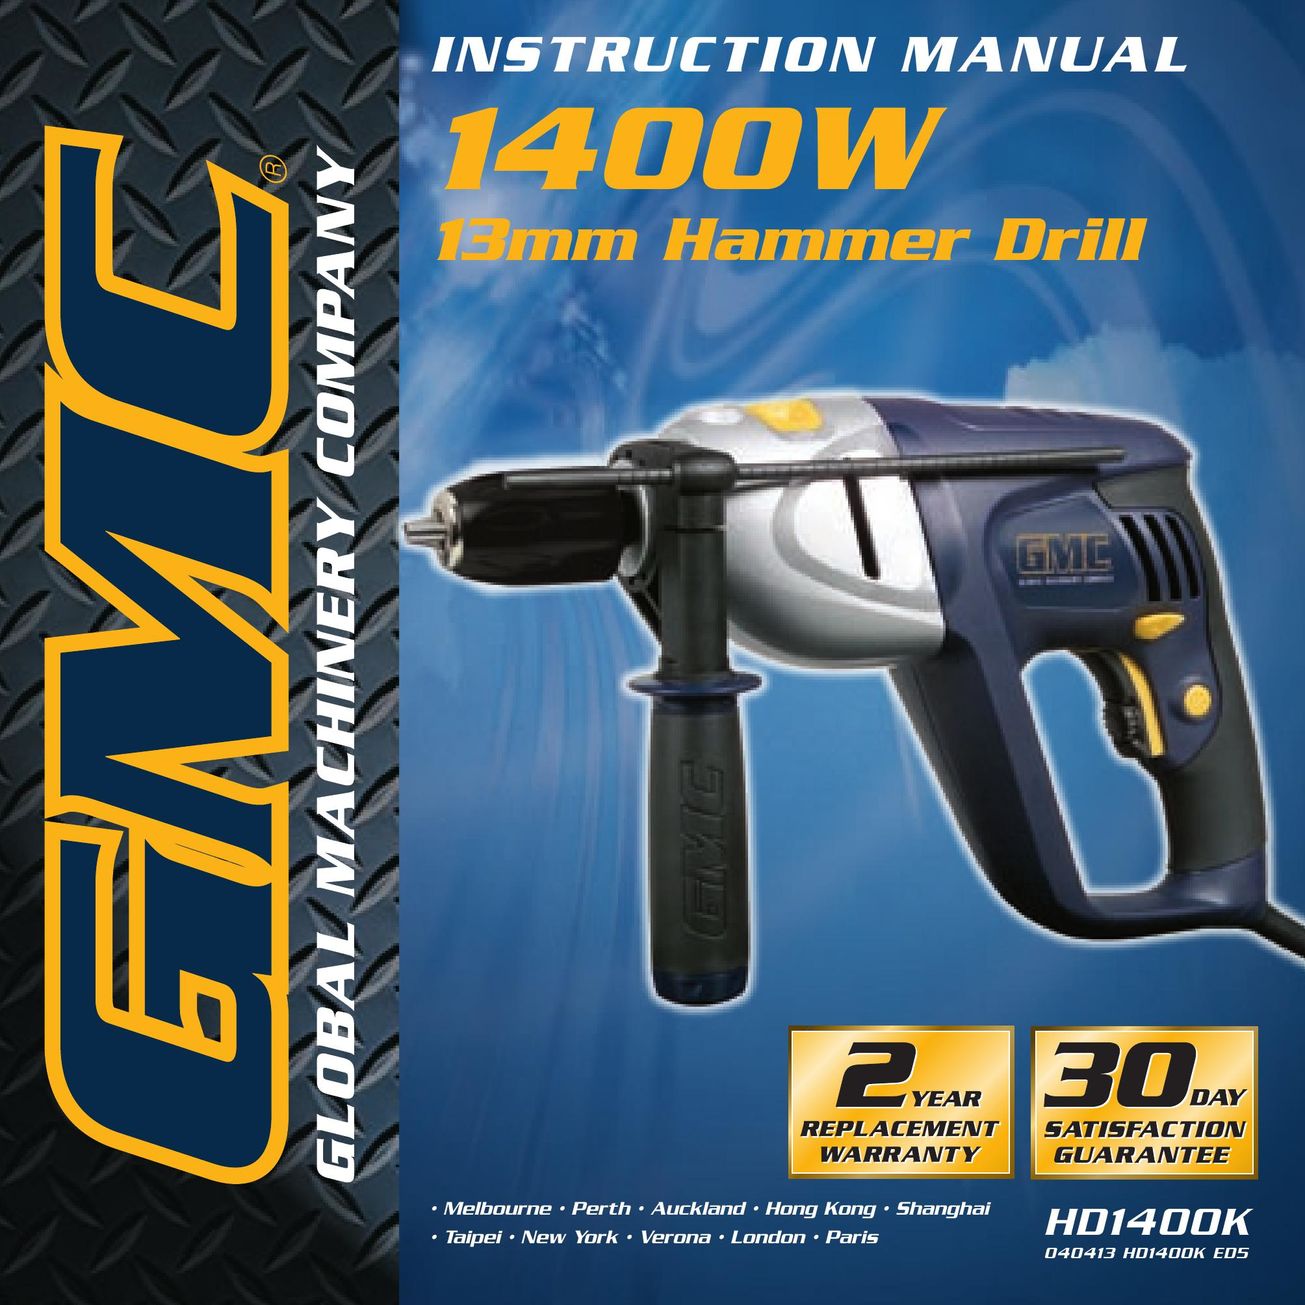 Global Machinery Company HD1400K Drill User Manual